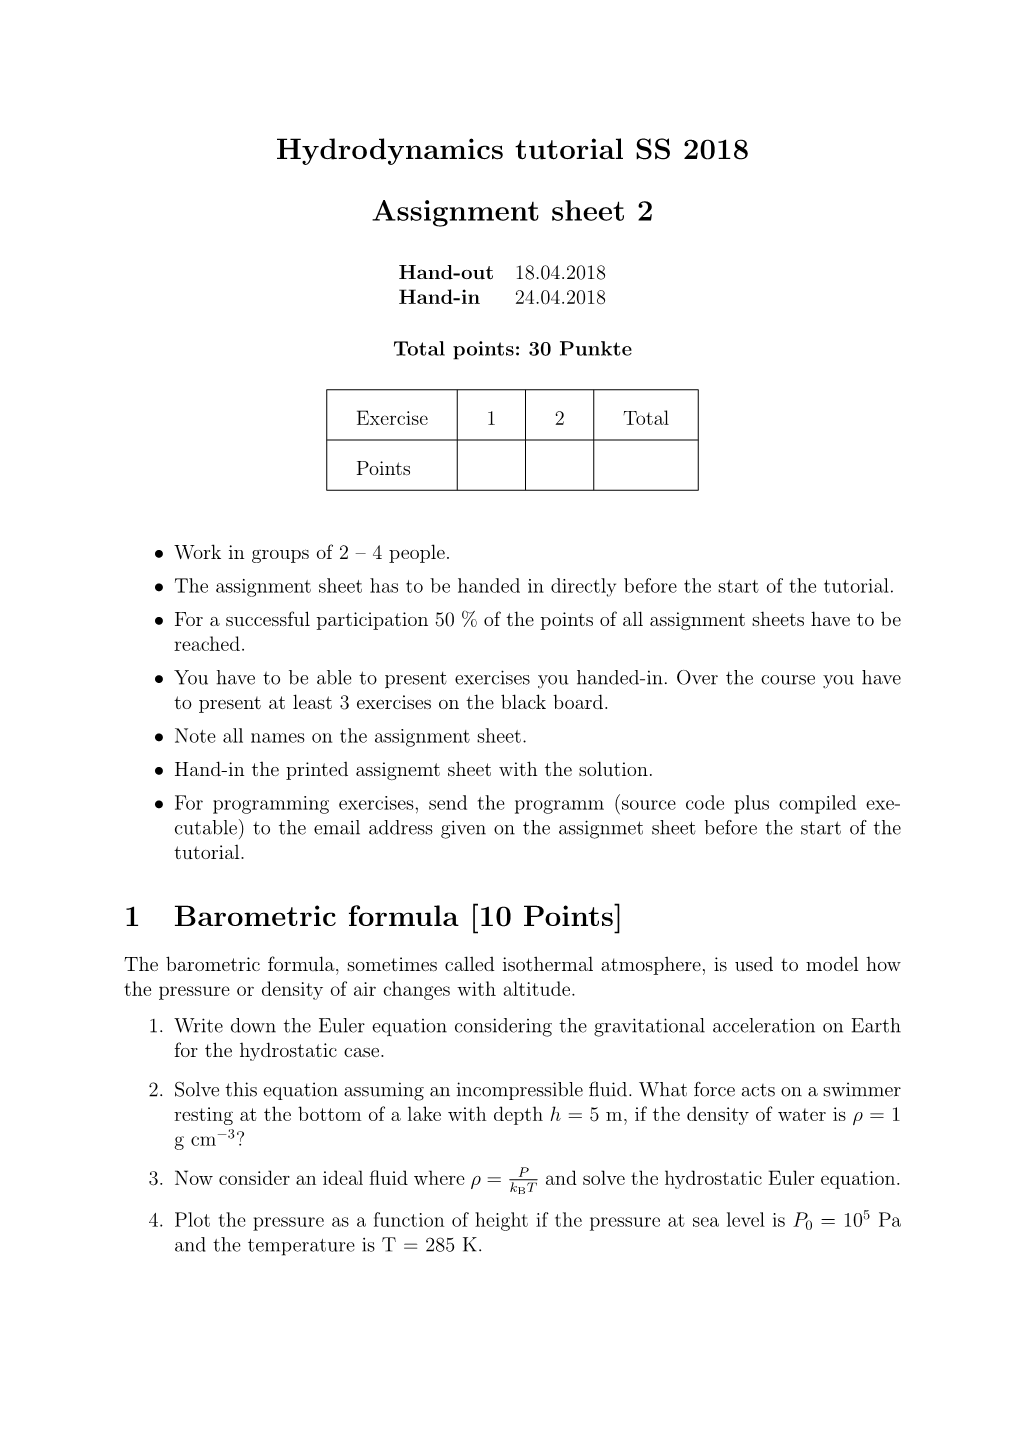 Hydrodynamics Tutorial SS 2018 Assignment Sheet 2 1 Barometric